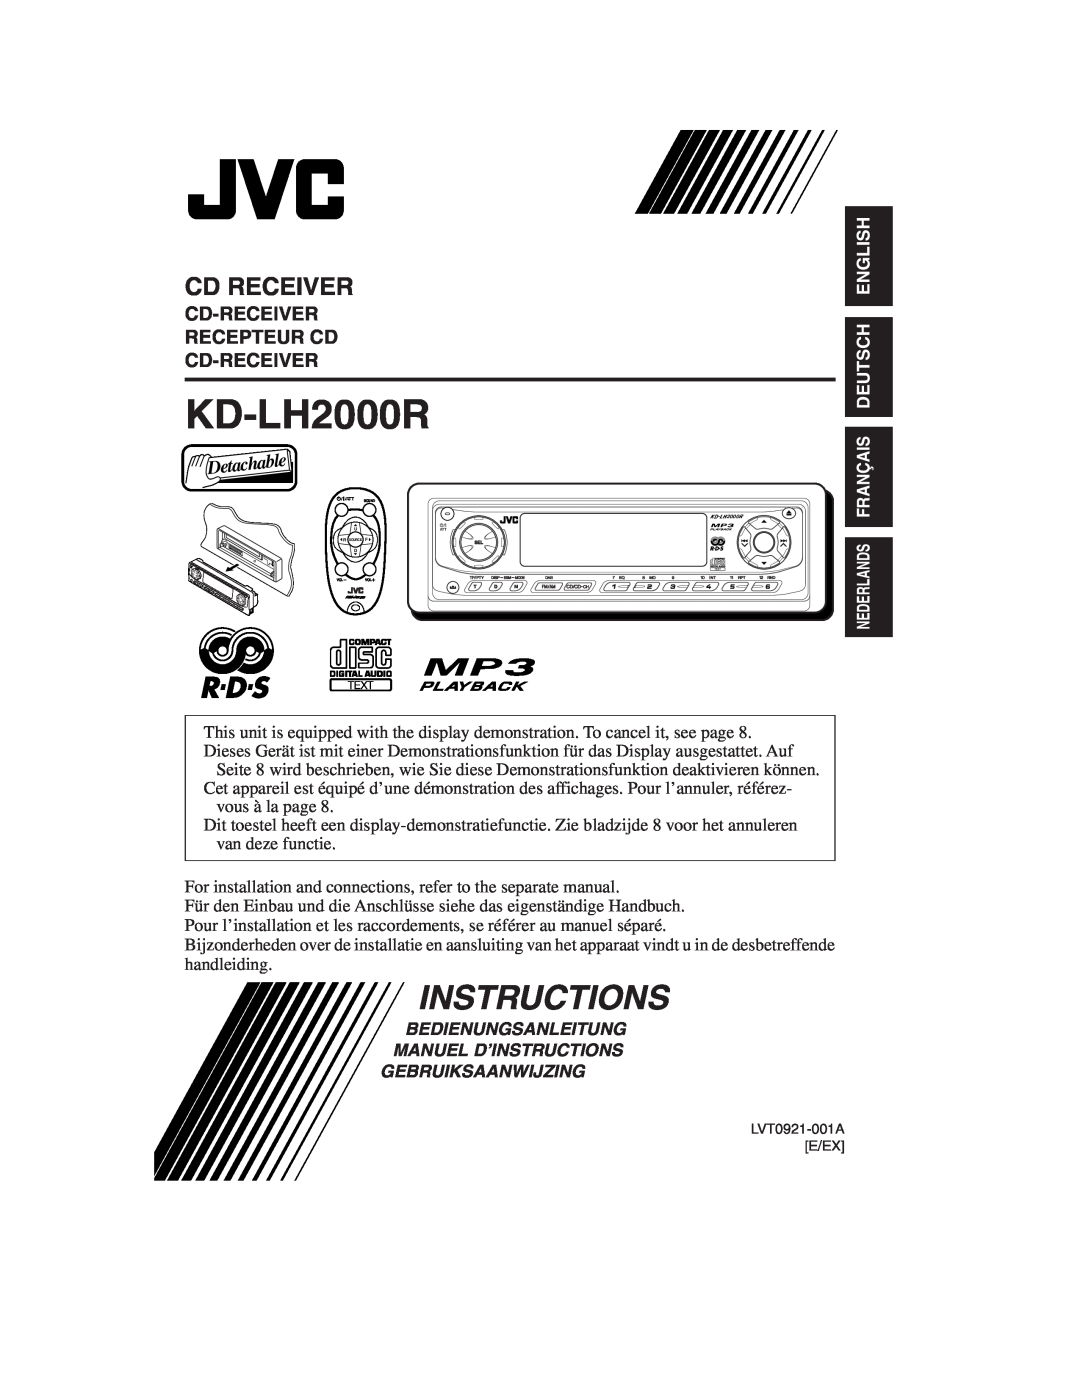 JVC KD-LH2000R manual Cd Receiver, Cd-Receiver Recepteur Cd Cd-Receiver, English Deutsch, Gebruiksaanwijzing, Instructions 